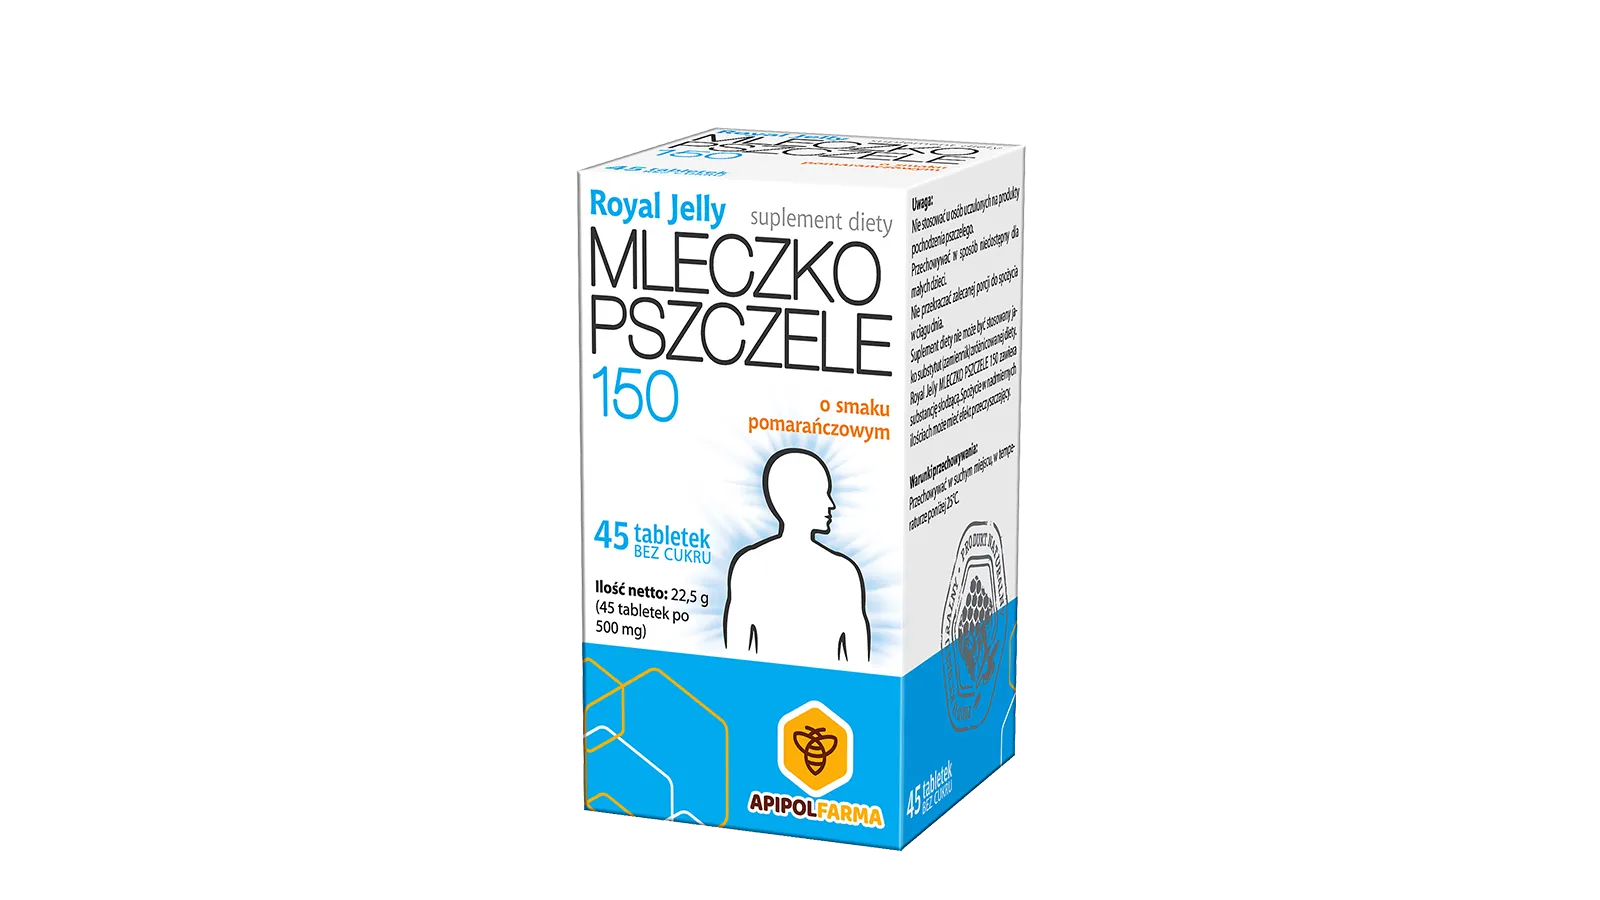 Royal Jelly Mleczko Pszczele 150, suplement diety, 45 tabletek